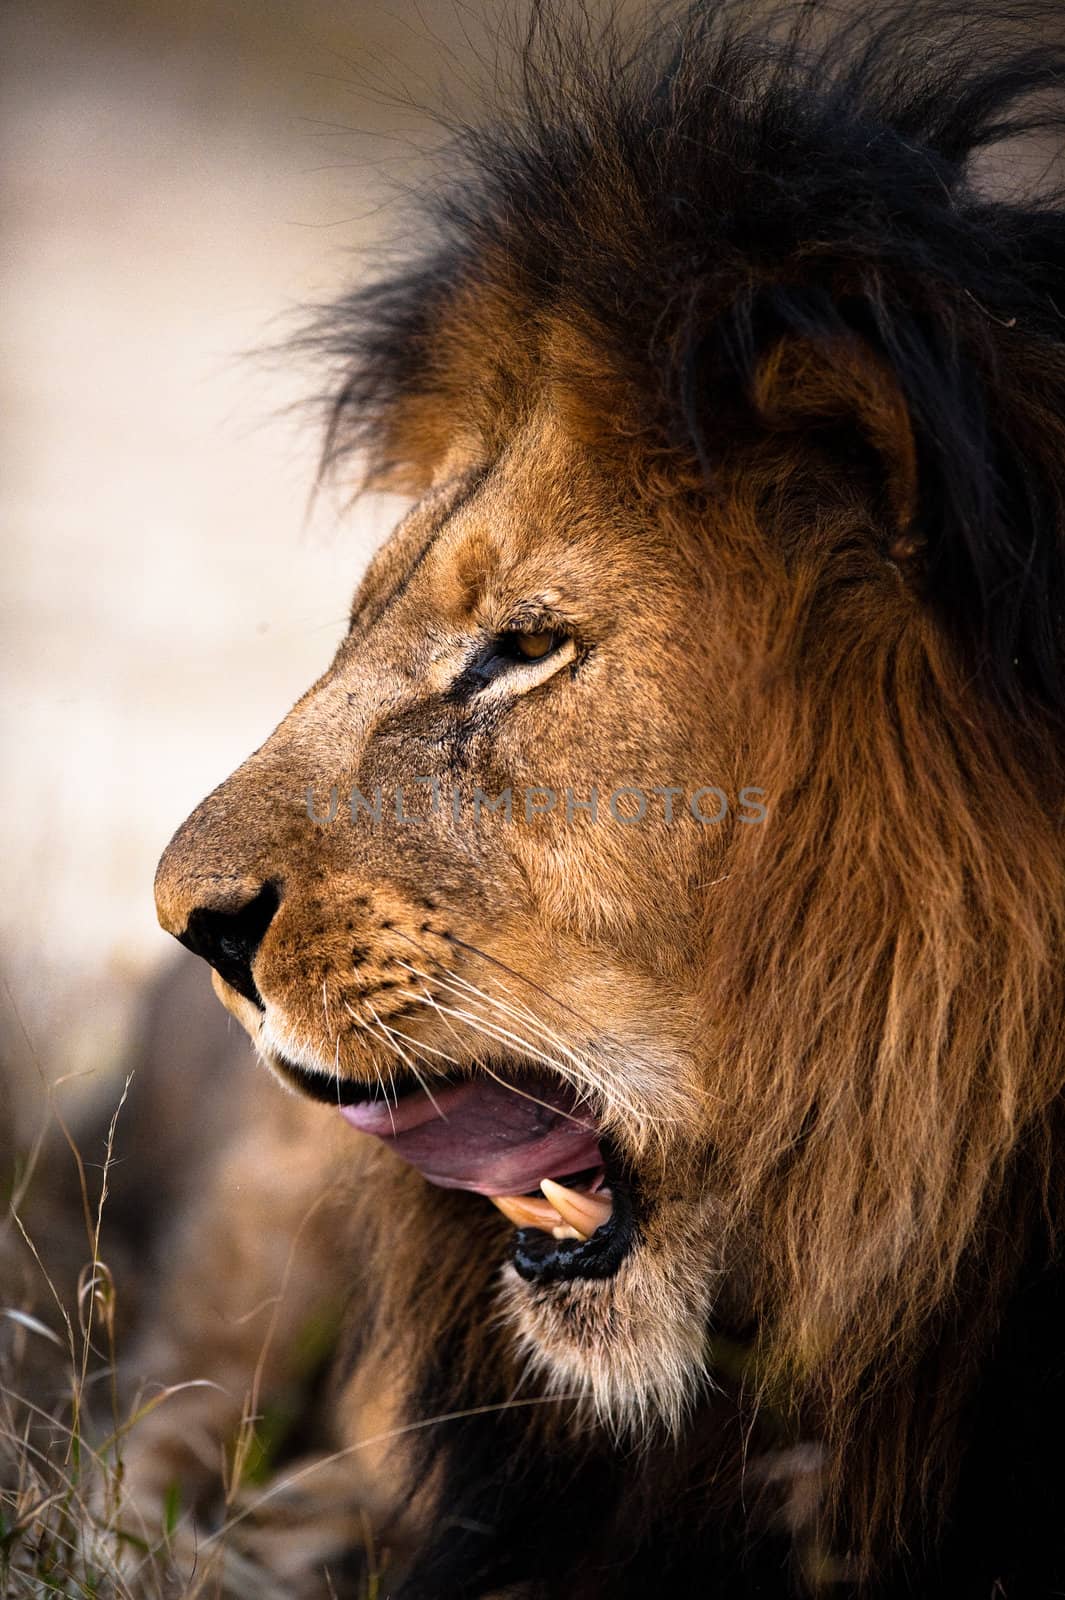 Yawning lion by edan